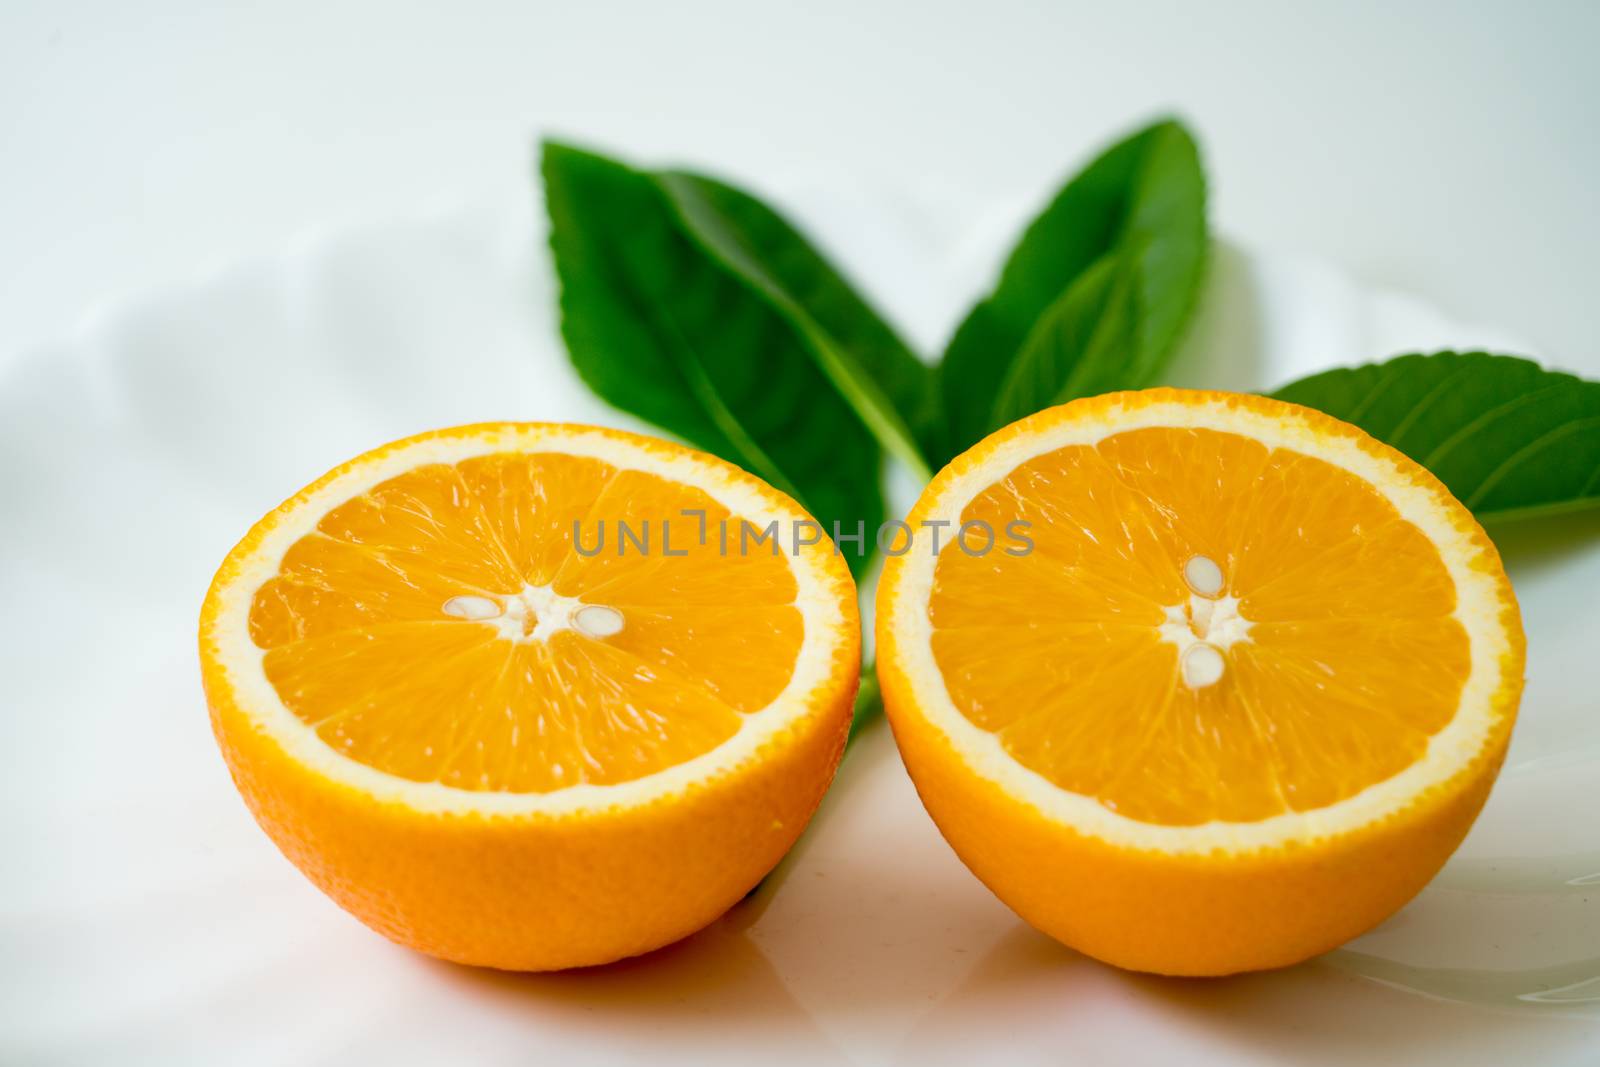 The organic slice orange on white plate - isolated